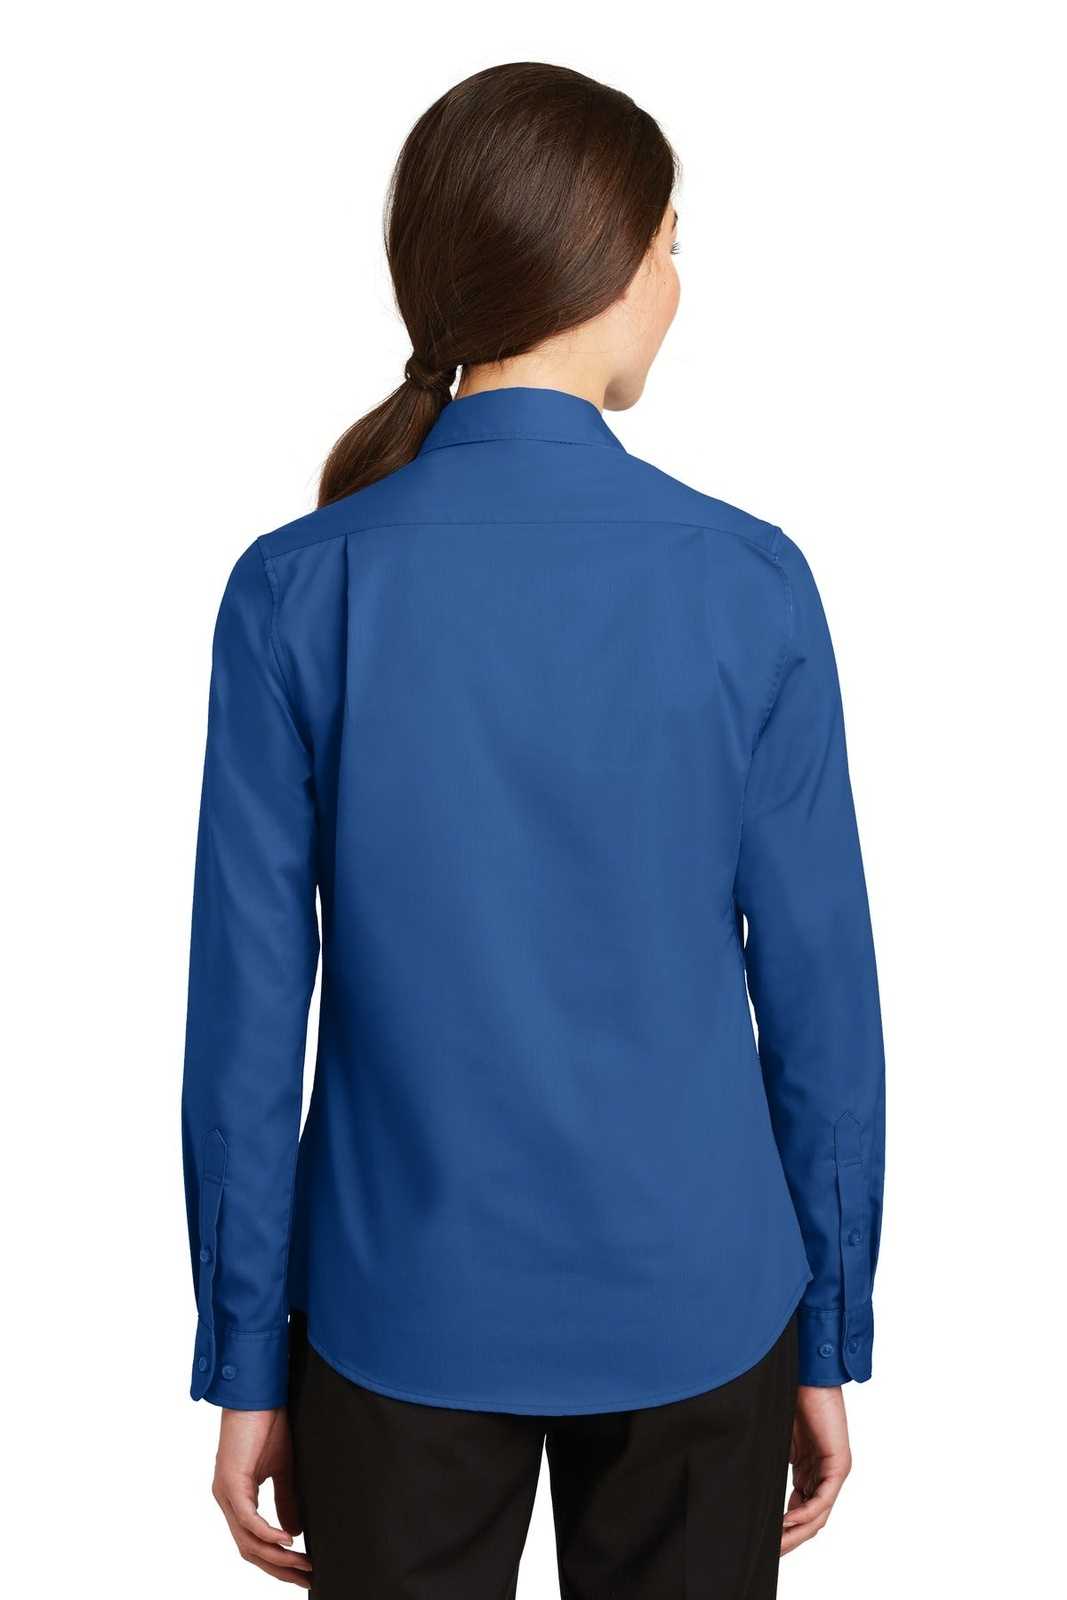 Port Authority L663 Ladies Superpro Twill Shirt - True Blue - HIT a Double - 1